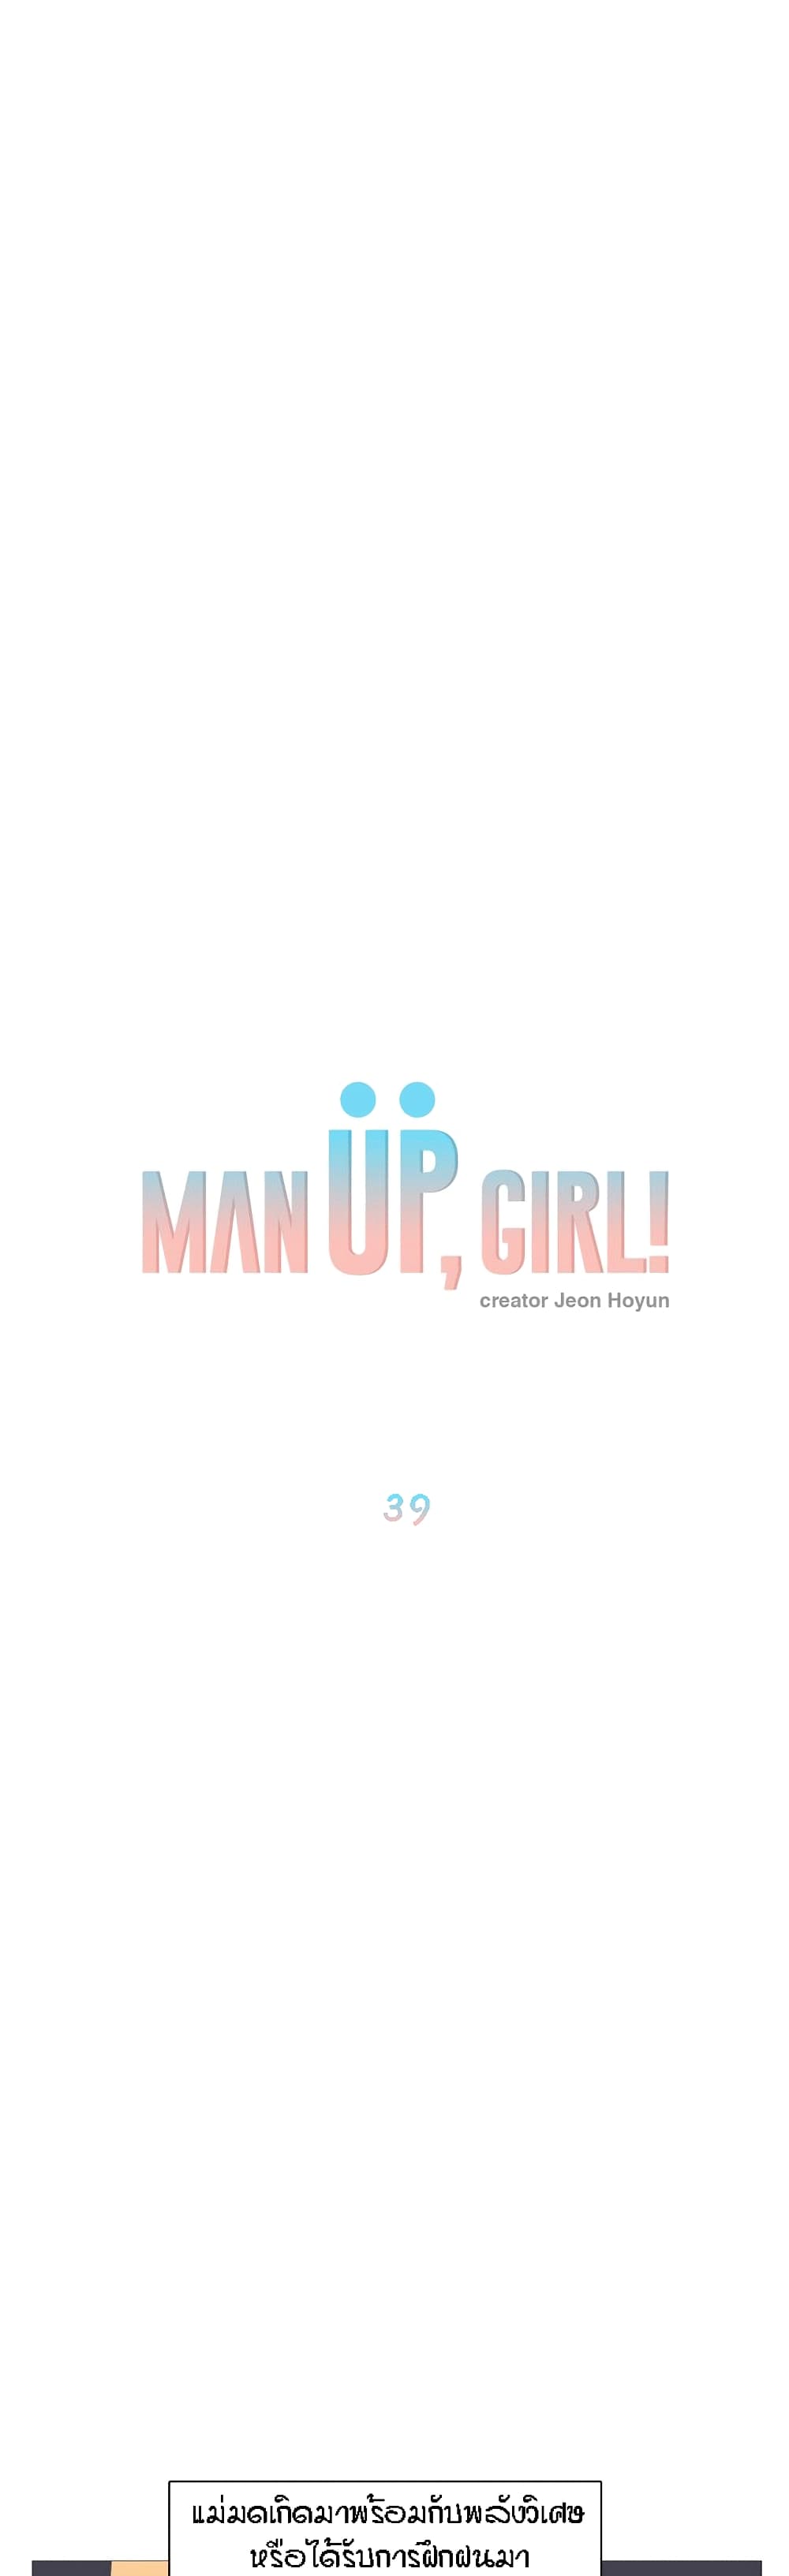 Man Up Girl 39-39